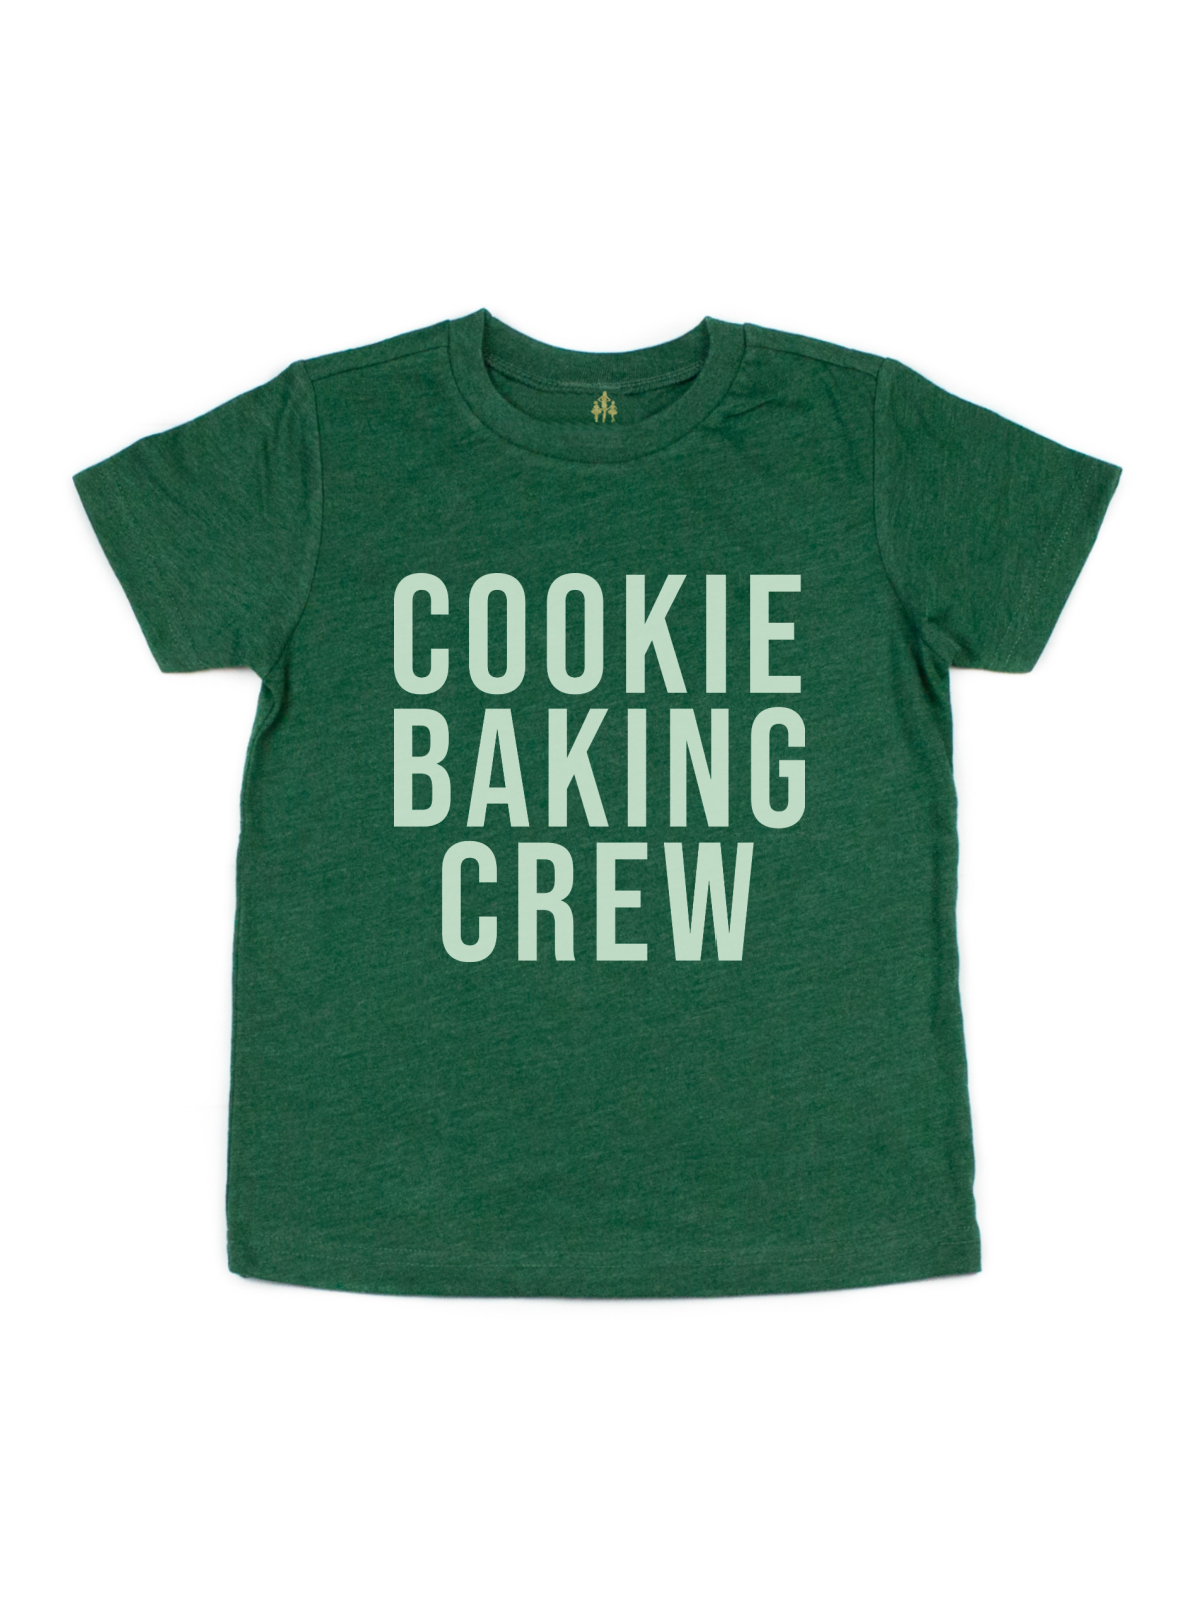 Cookie Baking Crew Kids Christmas Shirt in Green